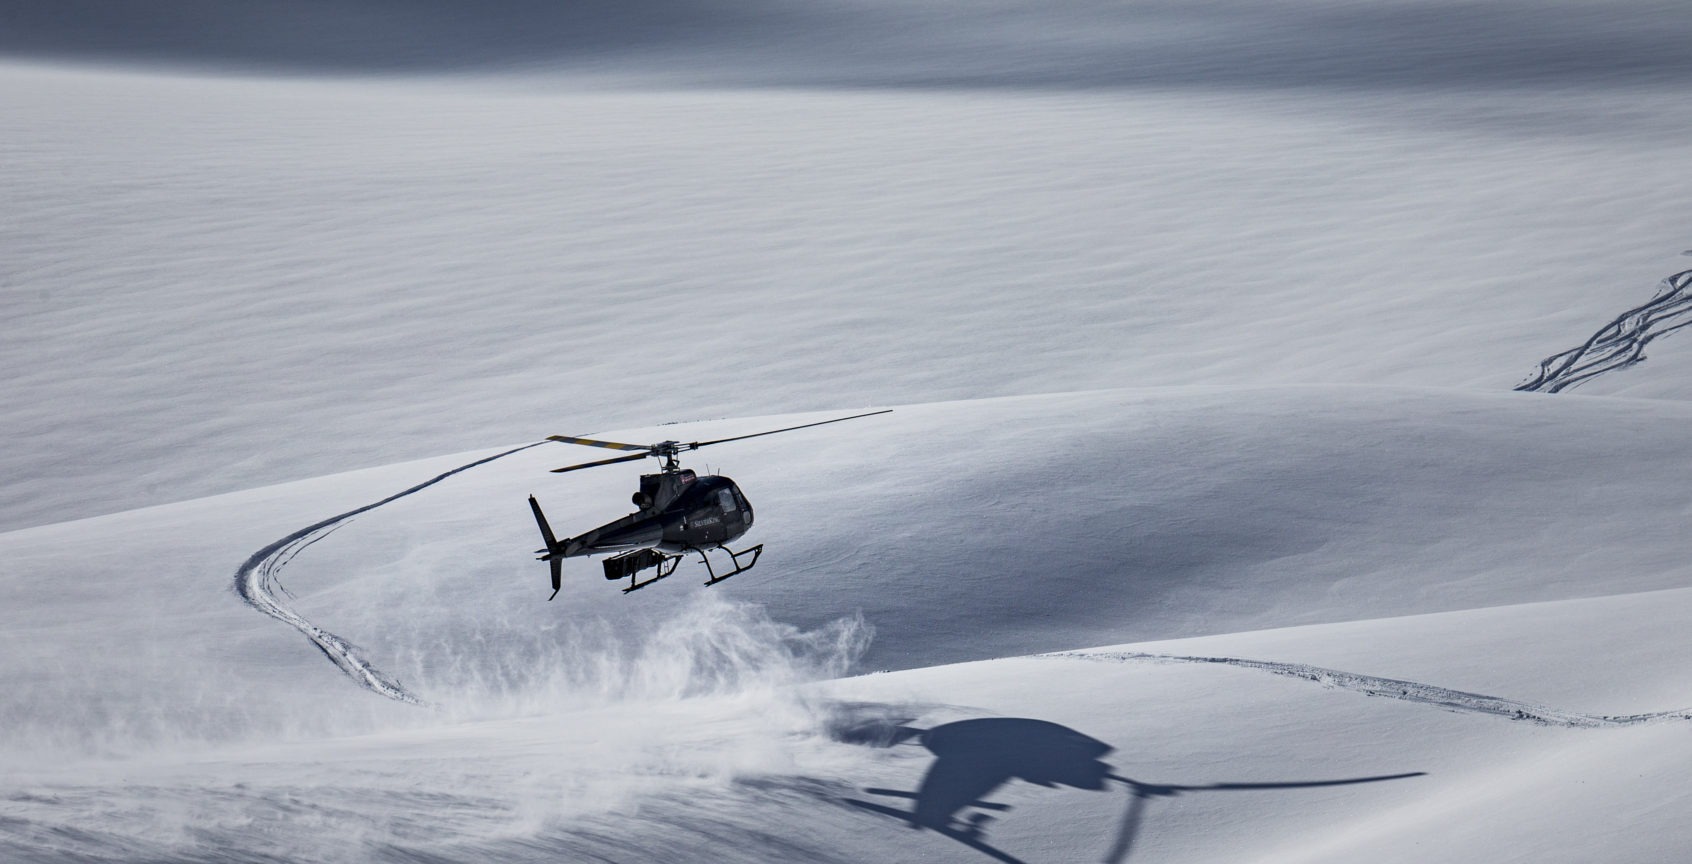 helicopter landing in fresh powder